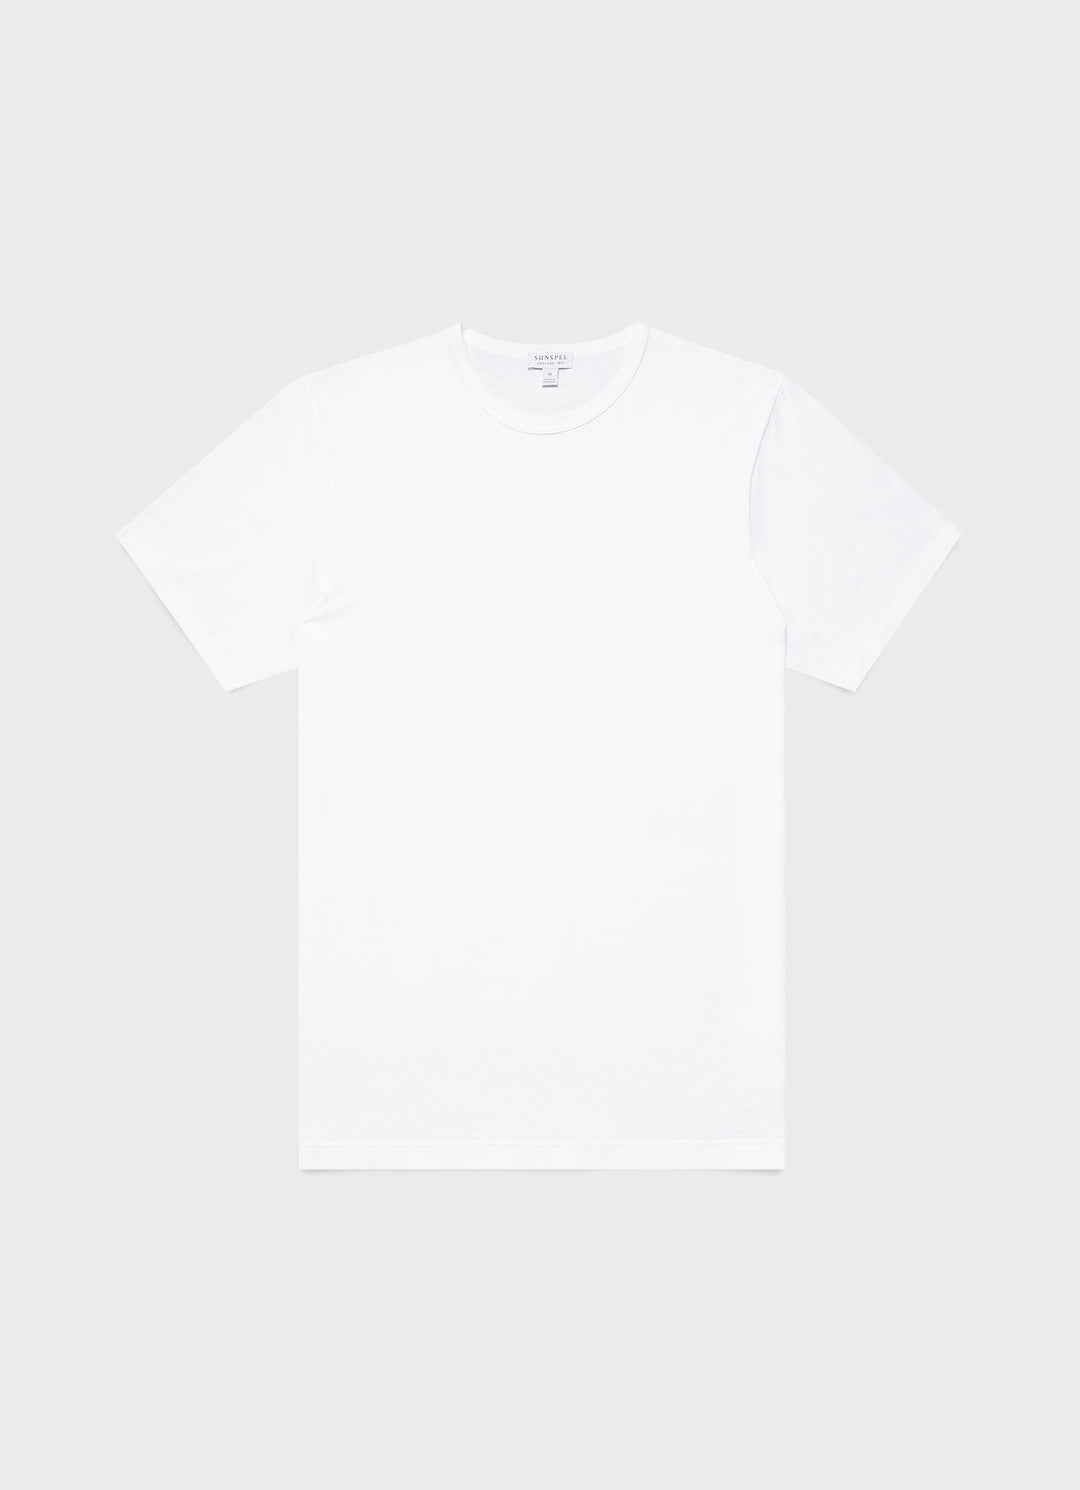 Men's Classic Cotton T-shirt in White | Sunspel